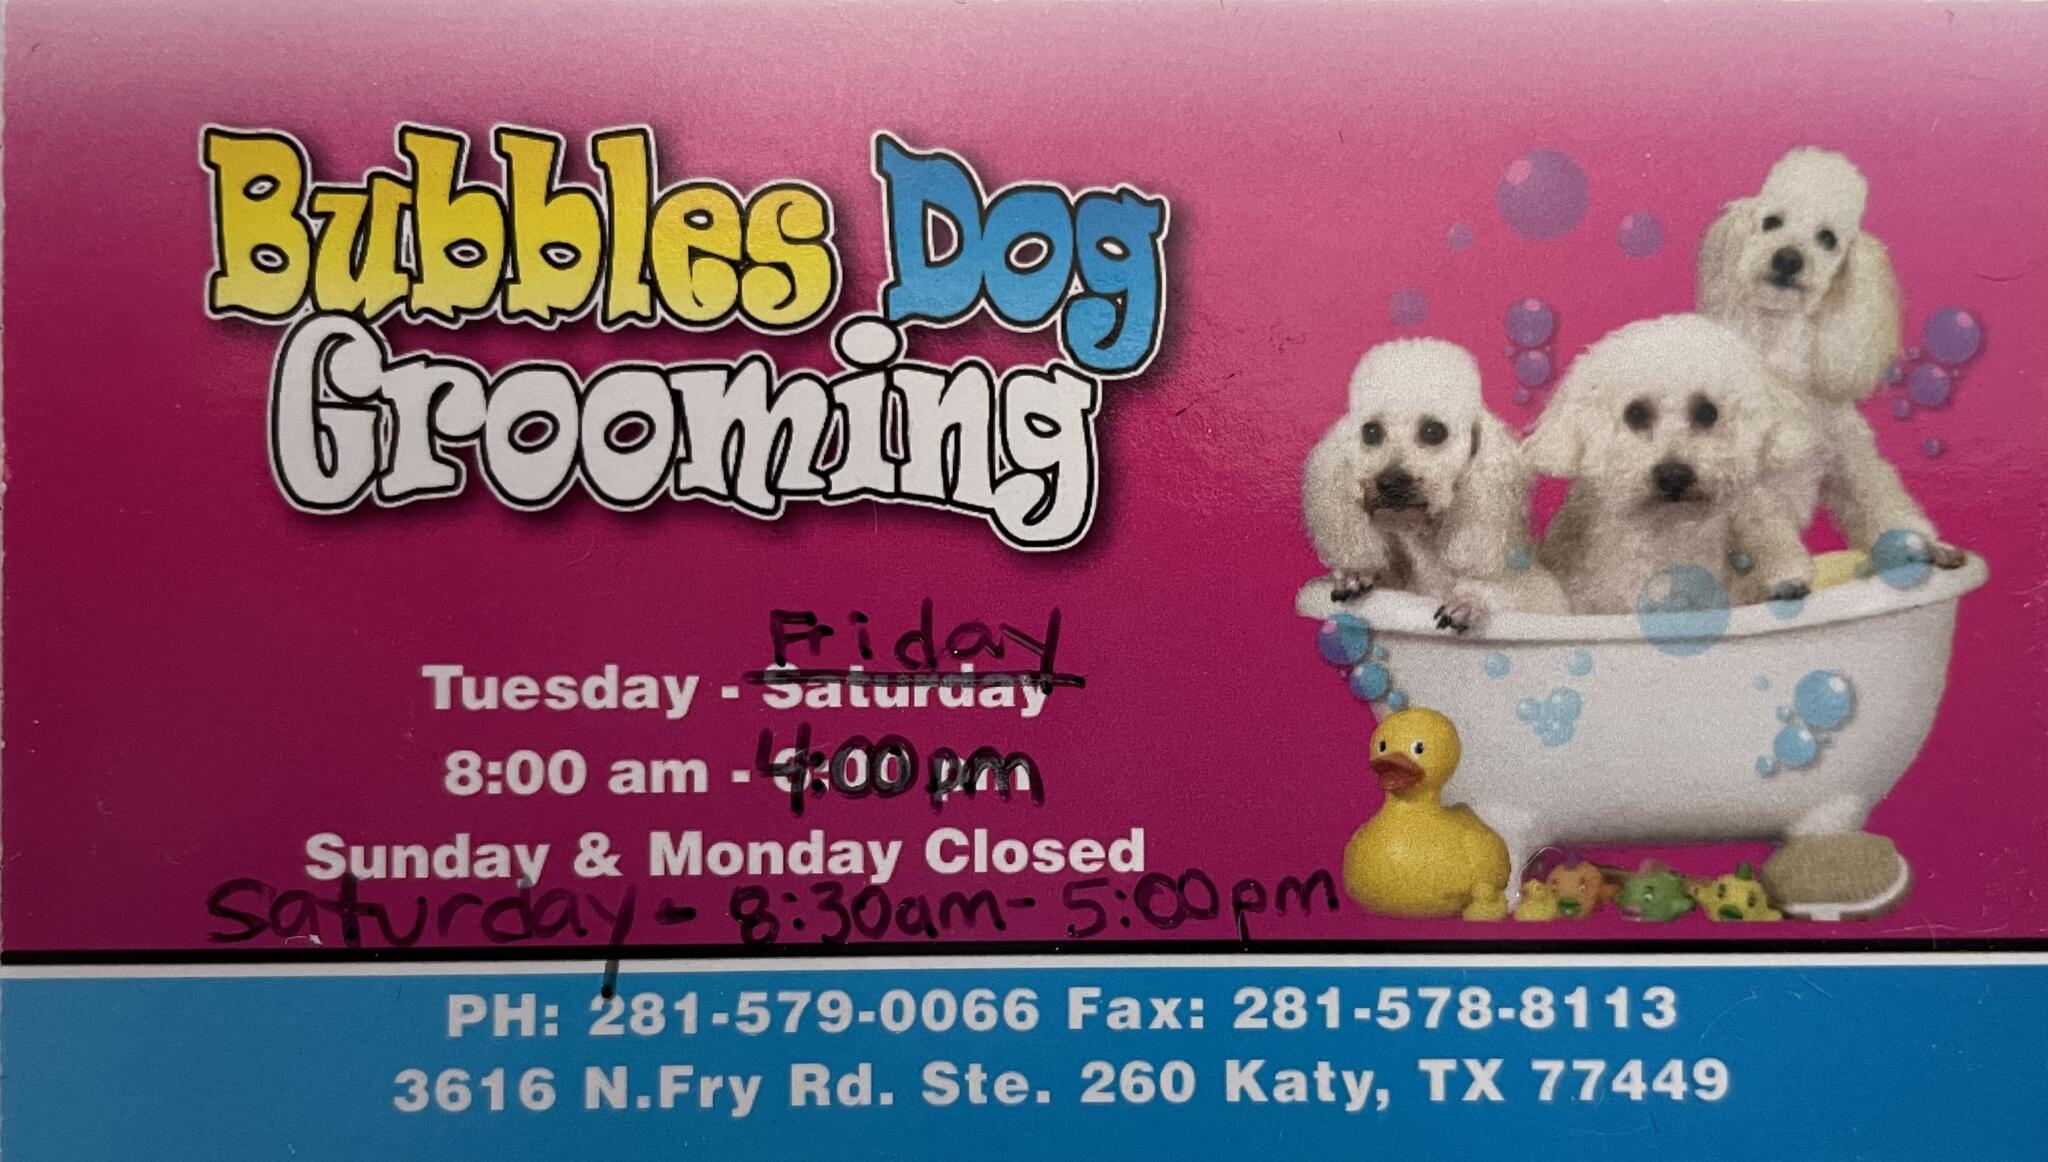 Bubbles Dog Grooming - Katy, TX - Nextdoor